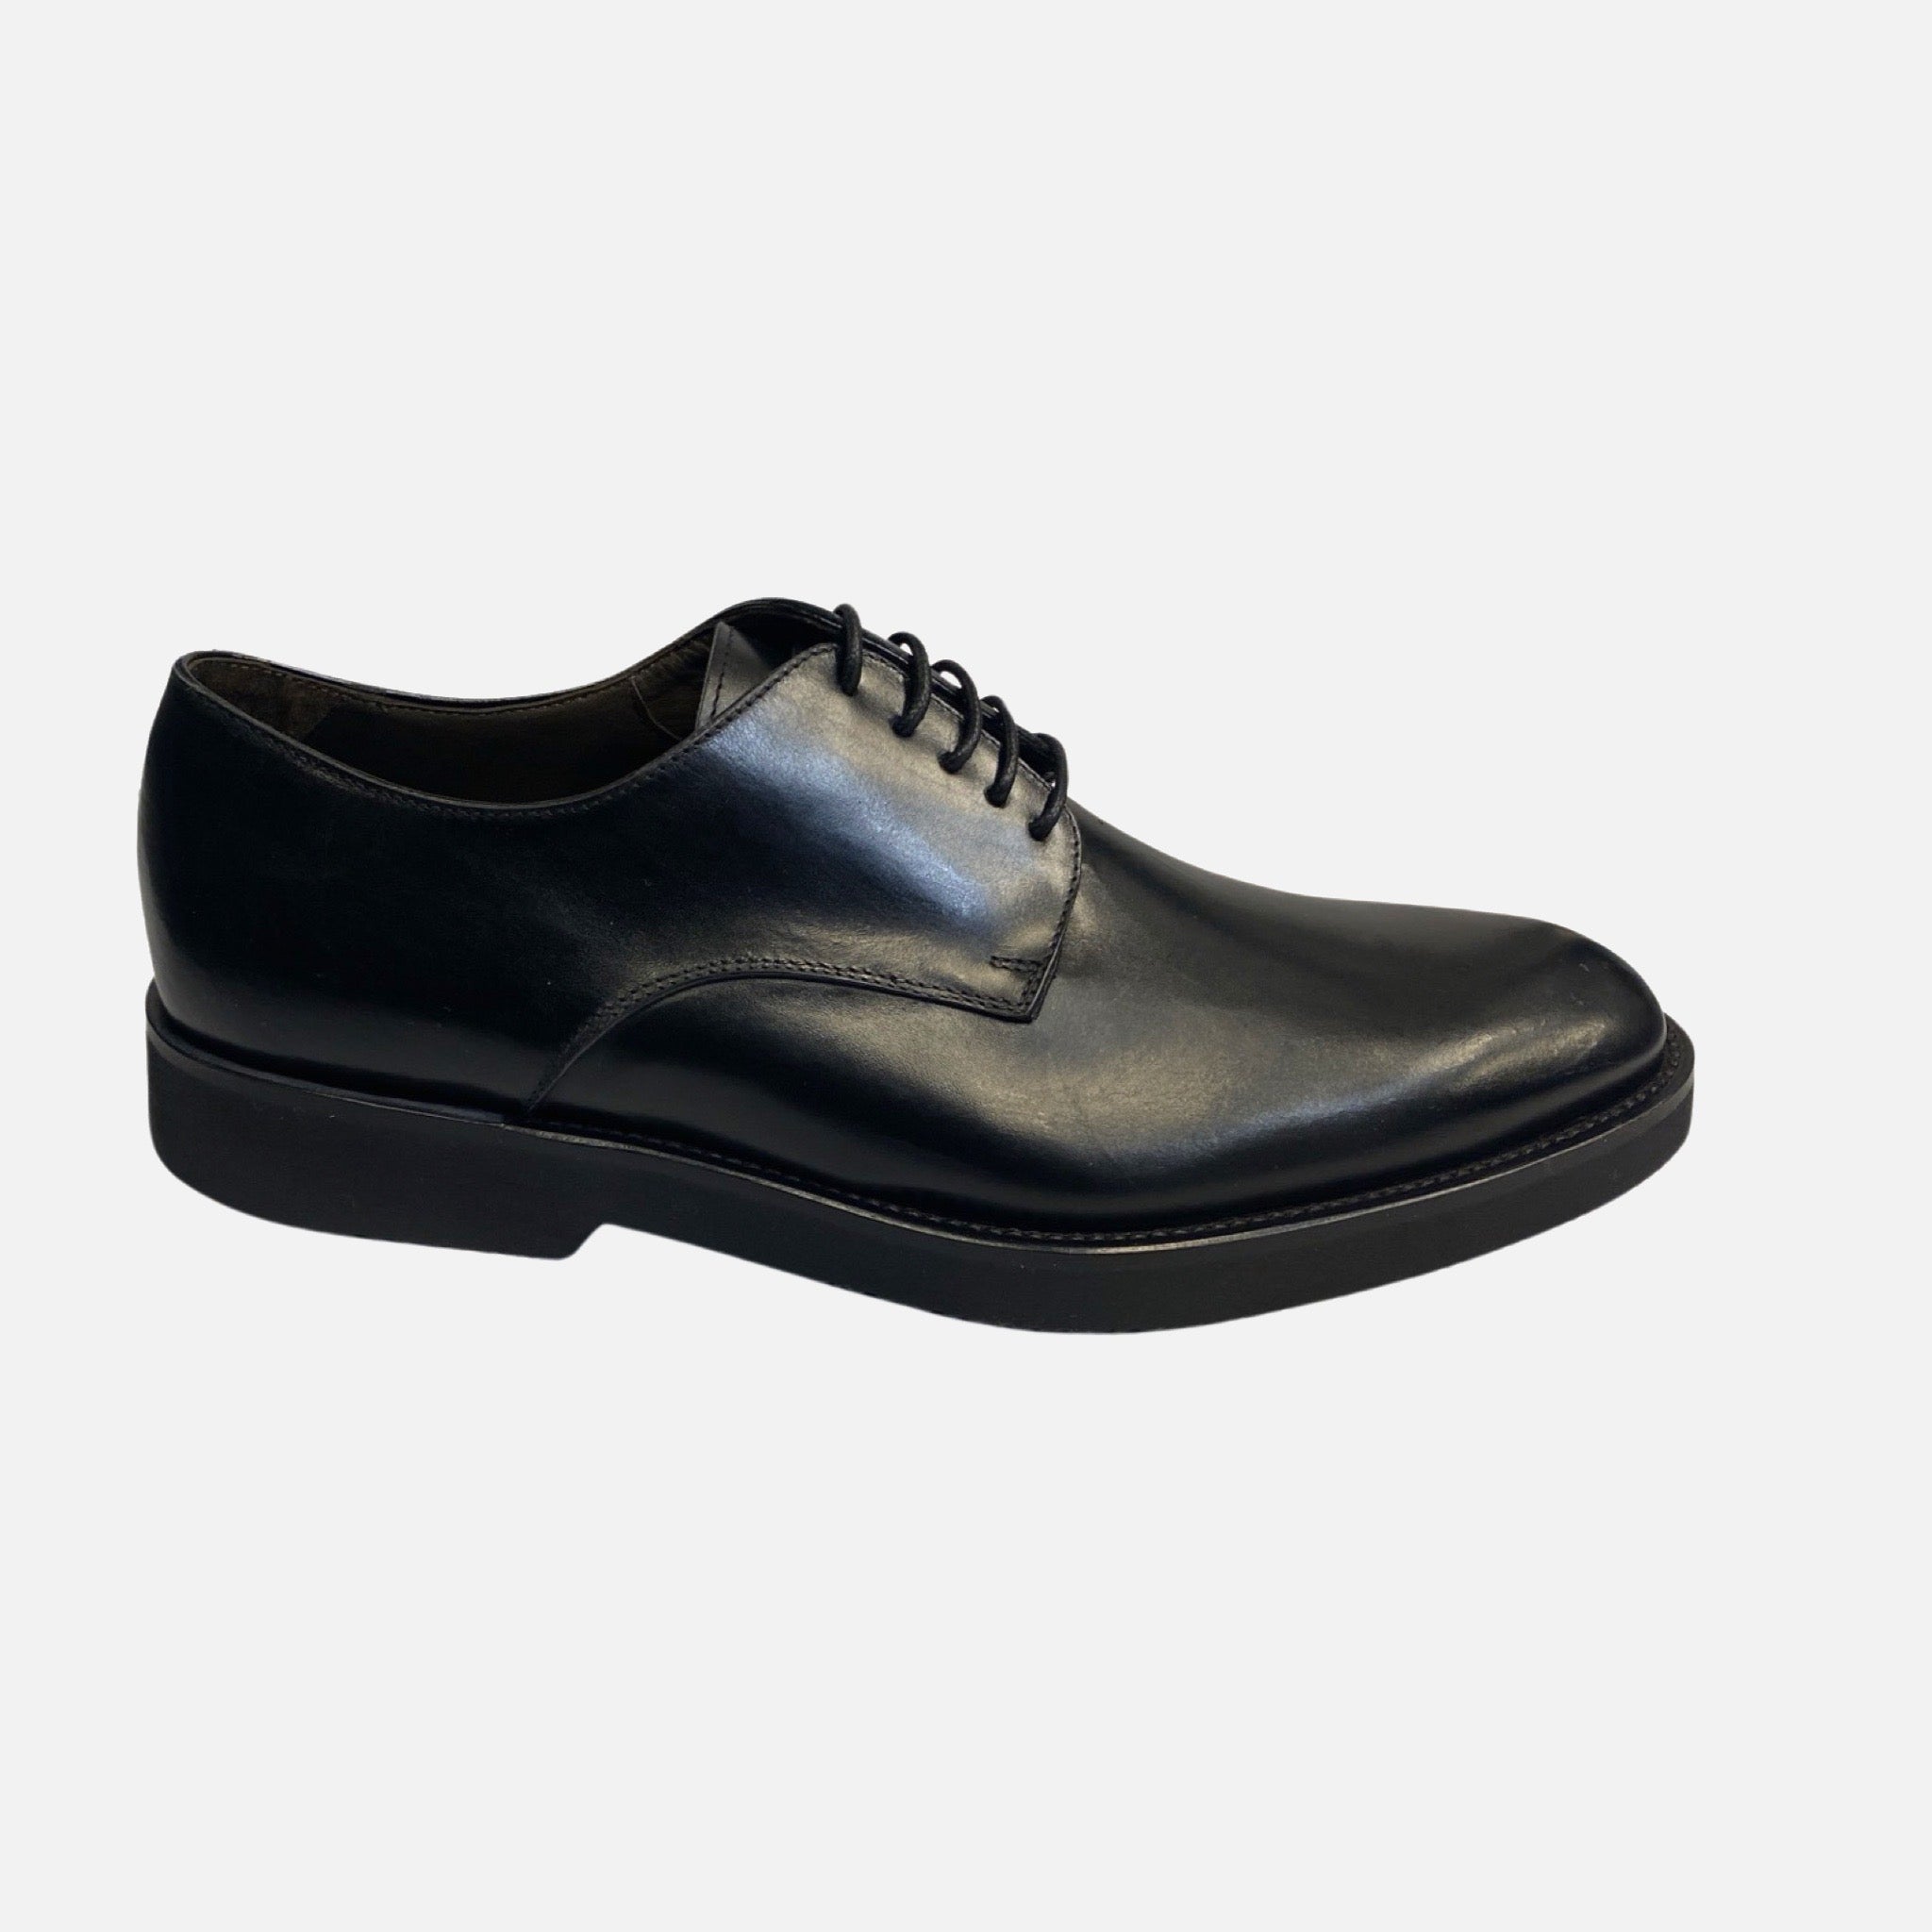 La Ferra Black Italian Plain Toe Shoe - Vibram Outsole | Clearance